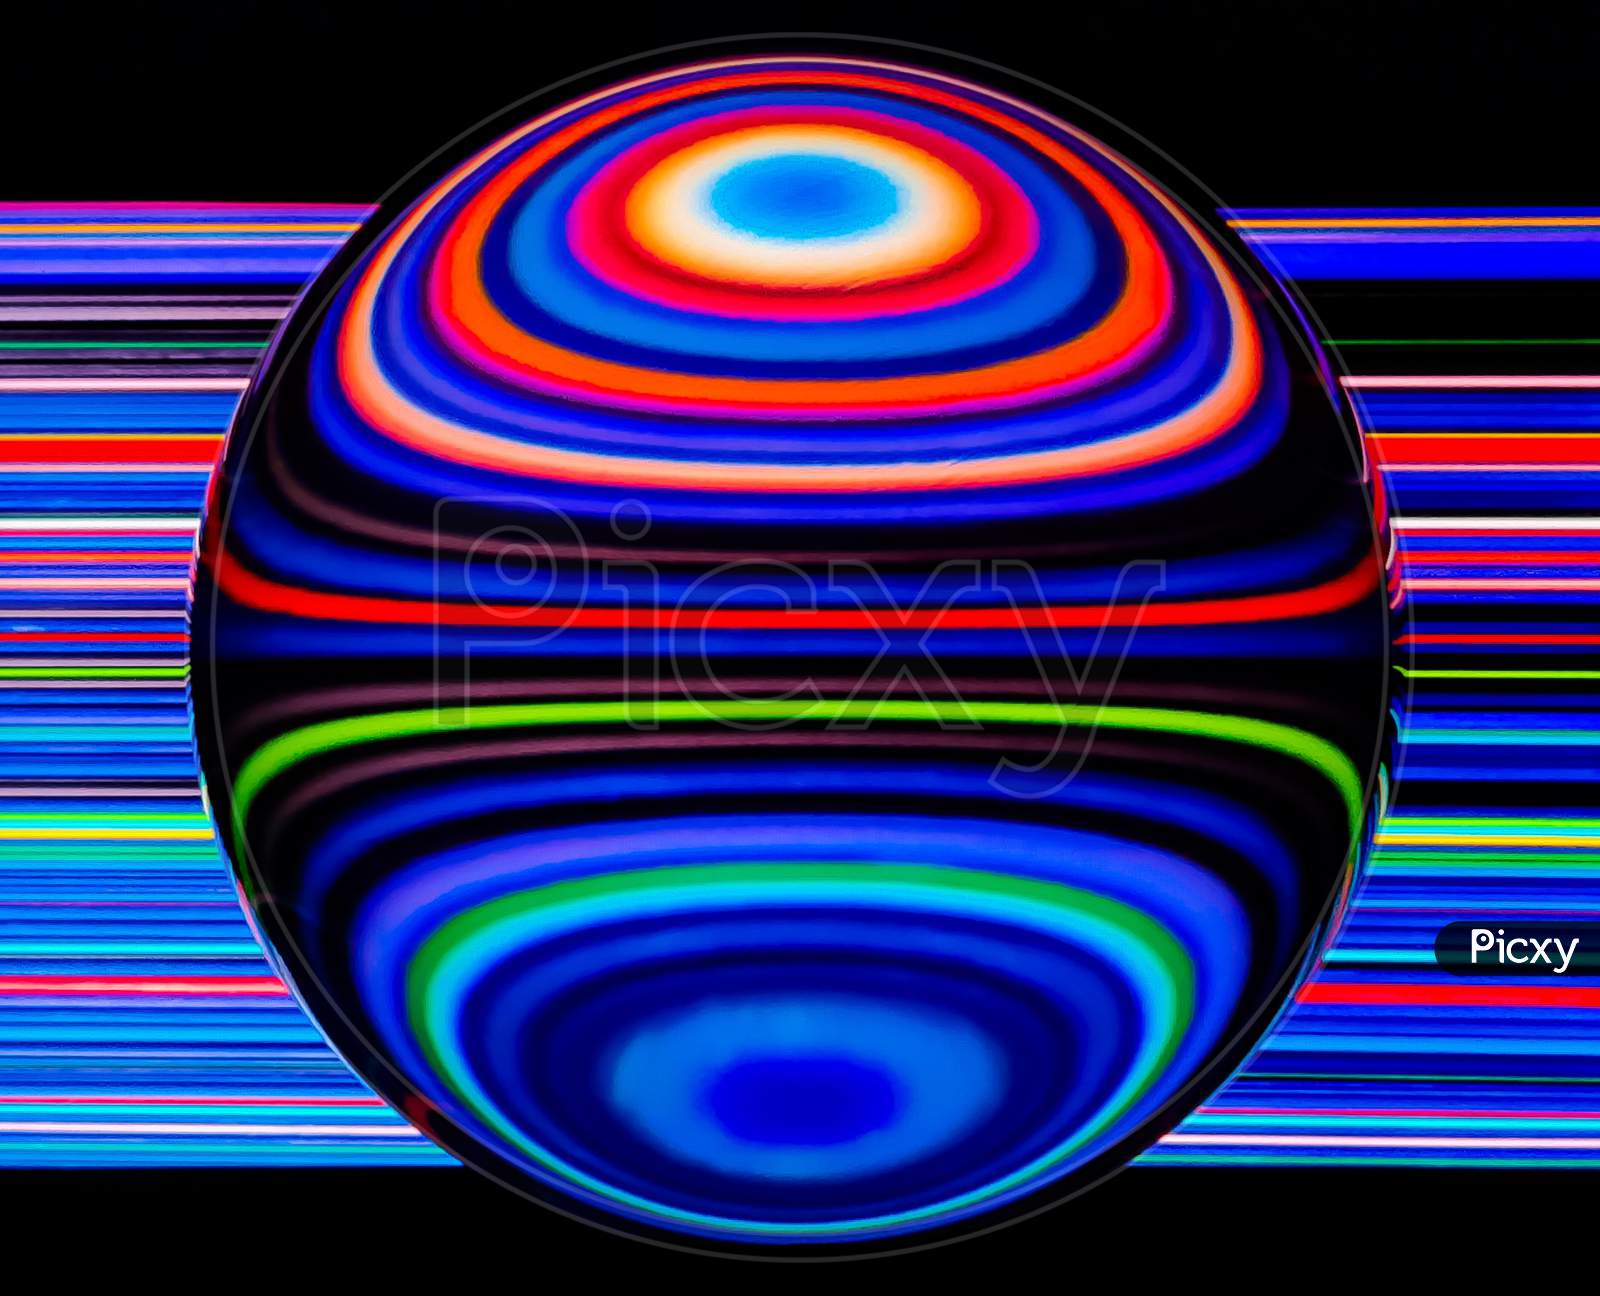 Colorful lensball pattern